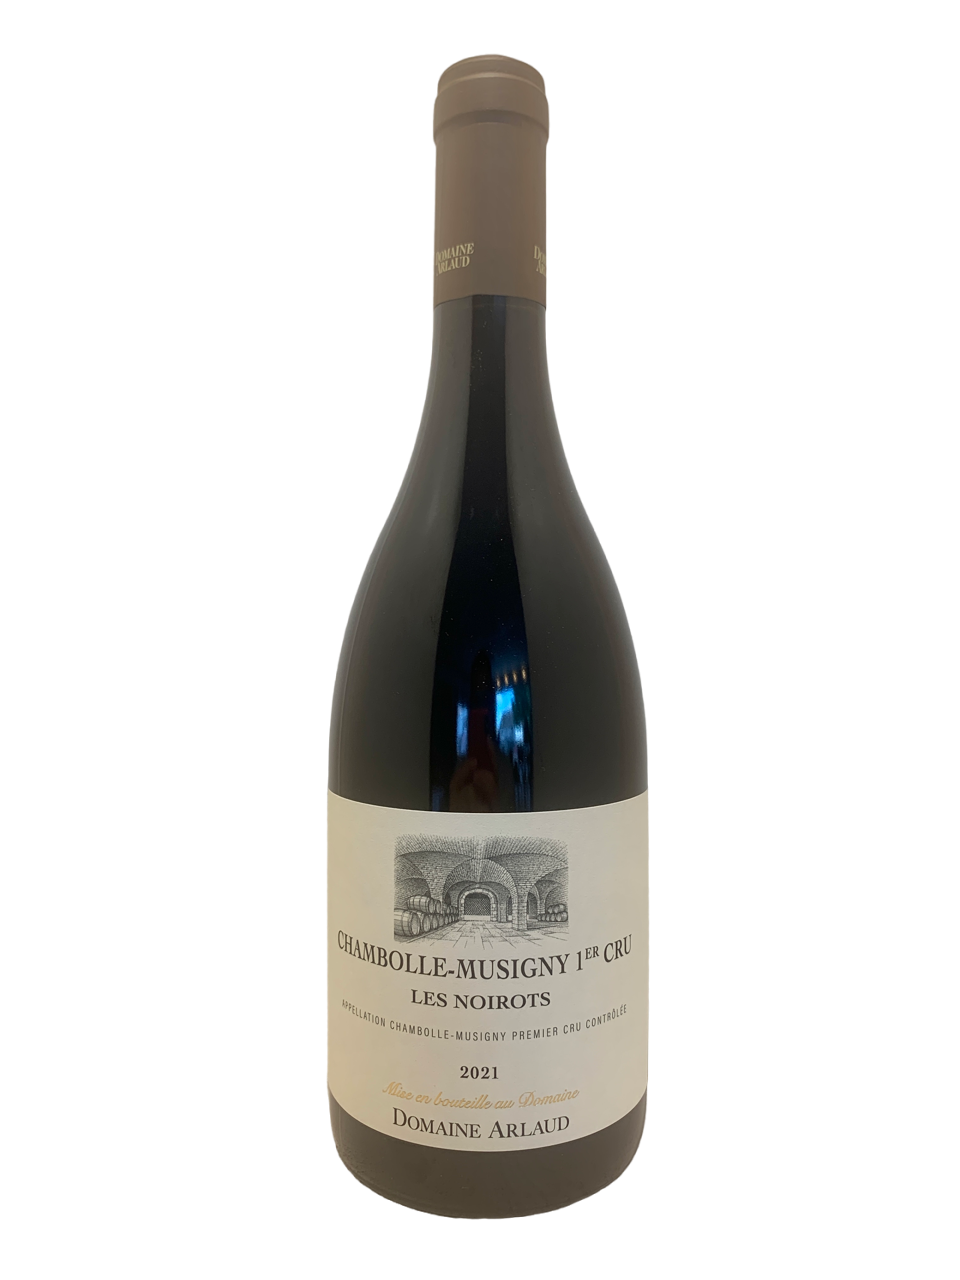 Bourgogne burgundy wine domaine arlaud chambolle-musigny 1er cru les noirots pinot noir